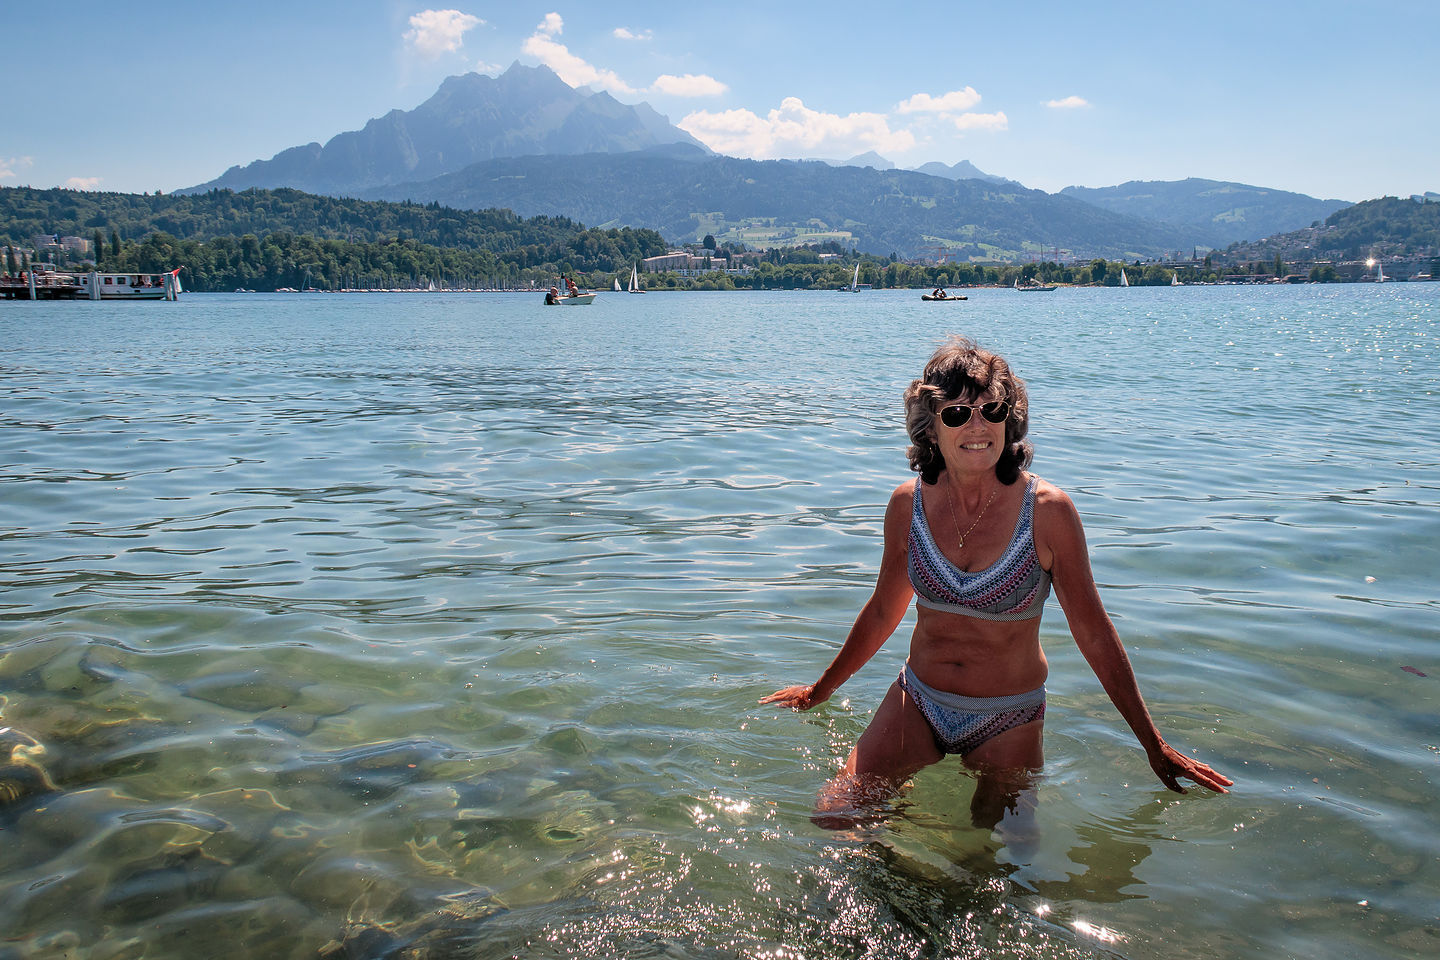 Lolo frolicking in Lake Lucerne with Mt. Pilatus peeking